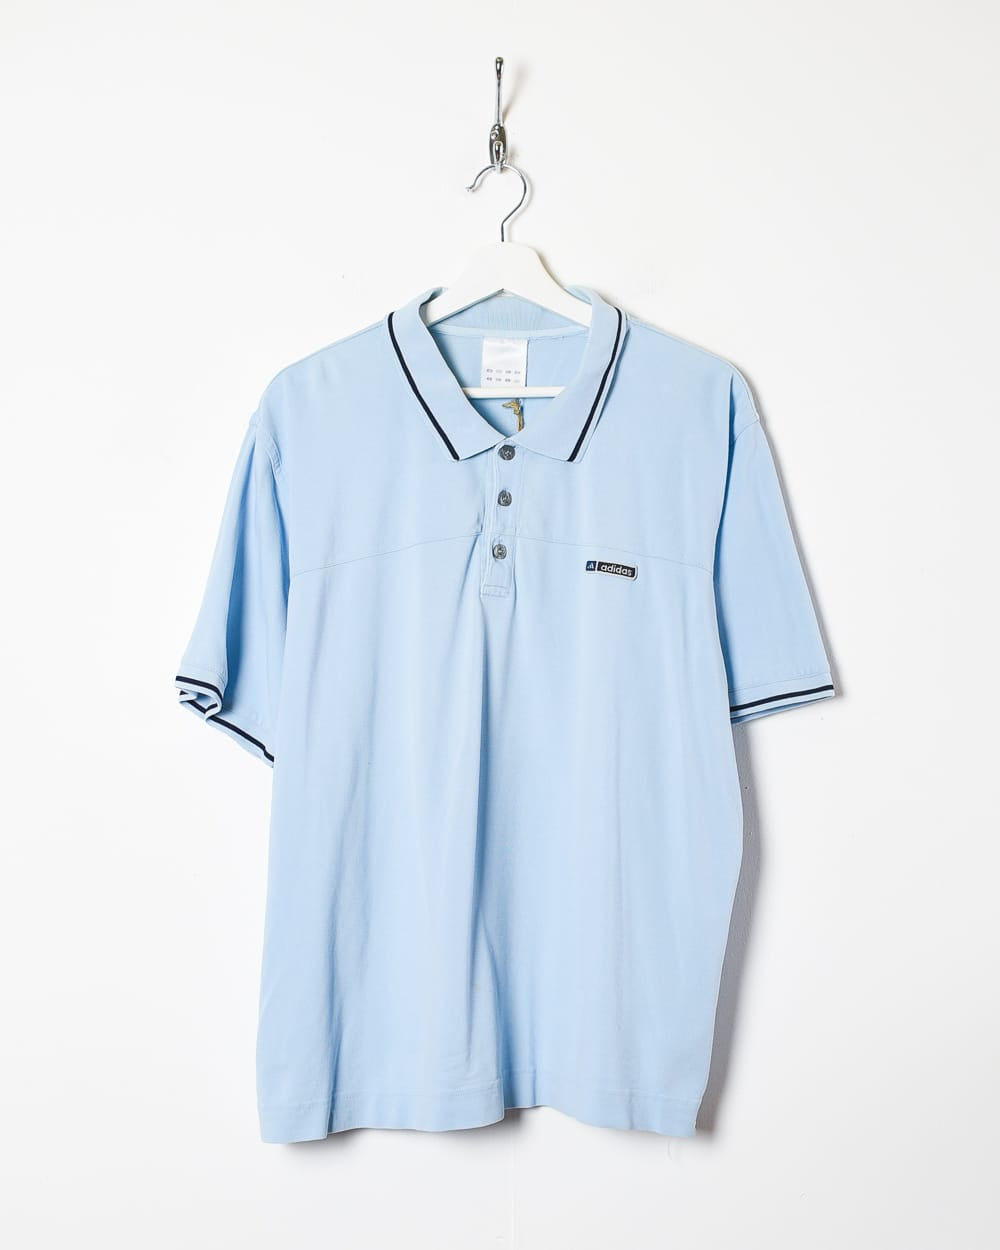 Baby Adidas Polo Shirt - Large